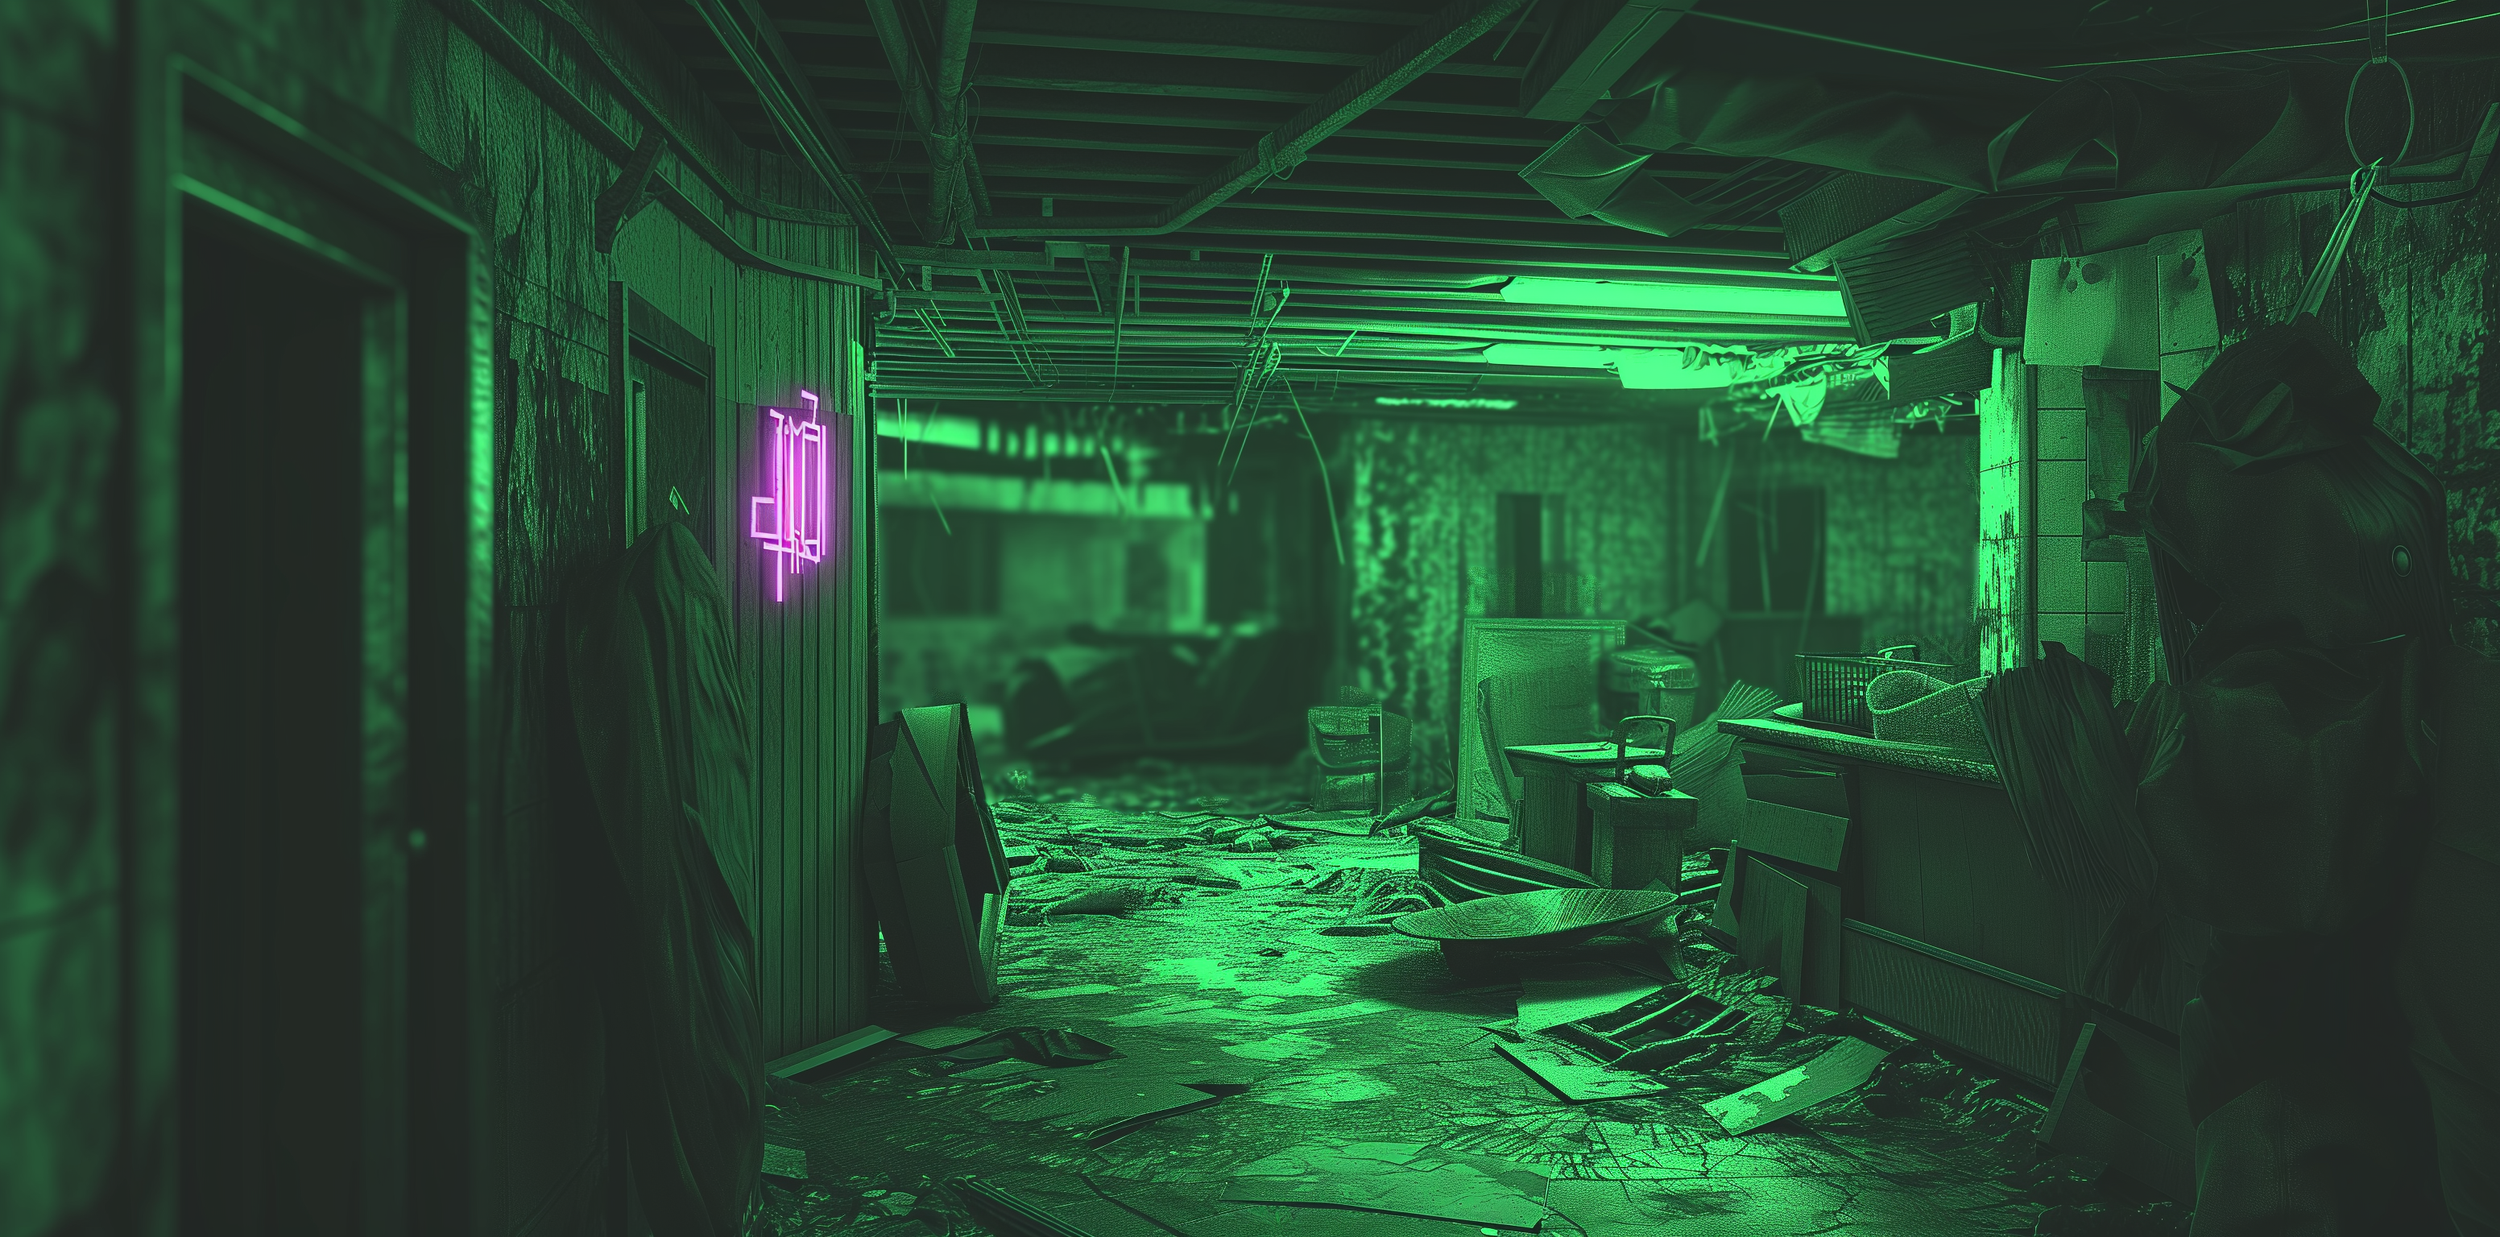 Neon Remnants - A Broken Future